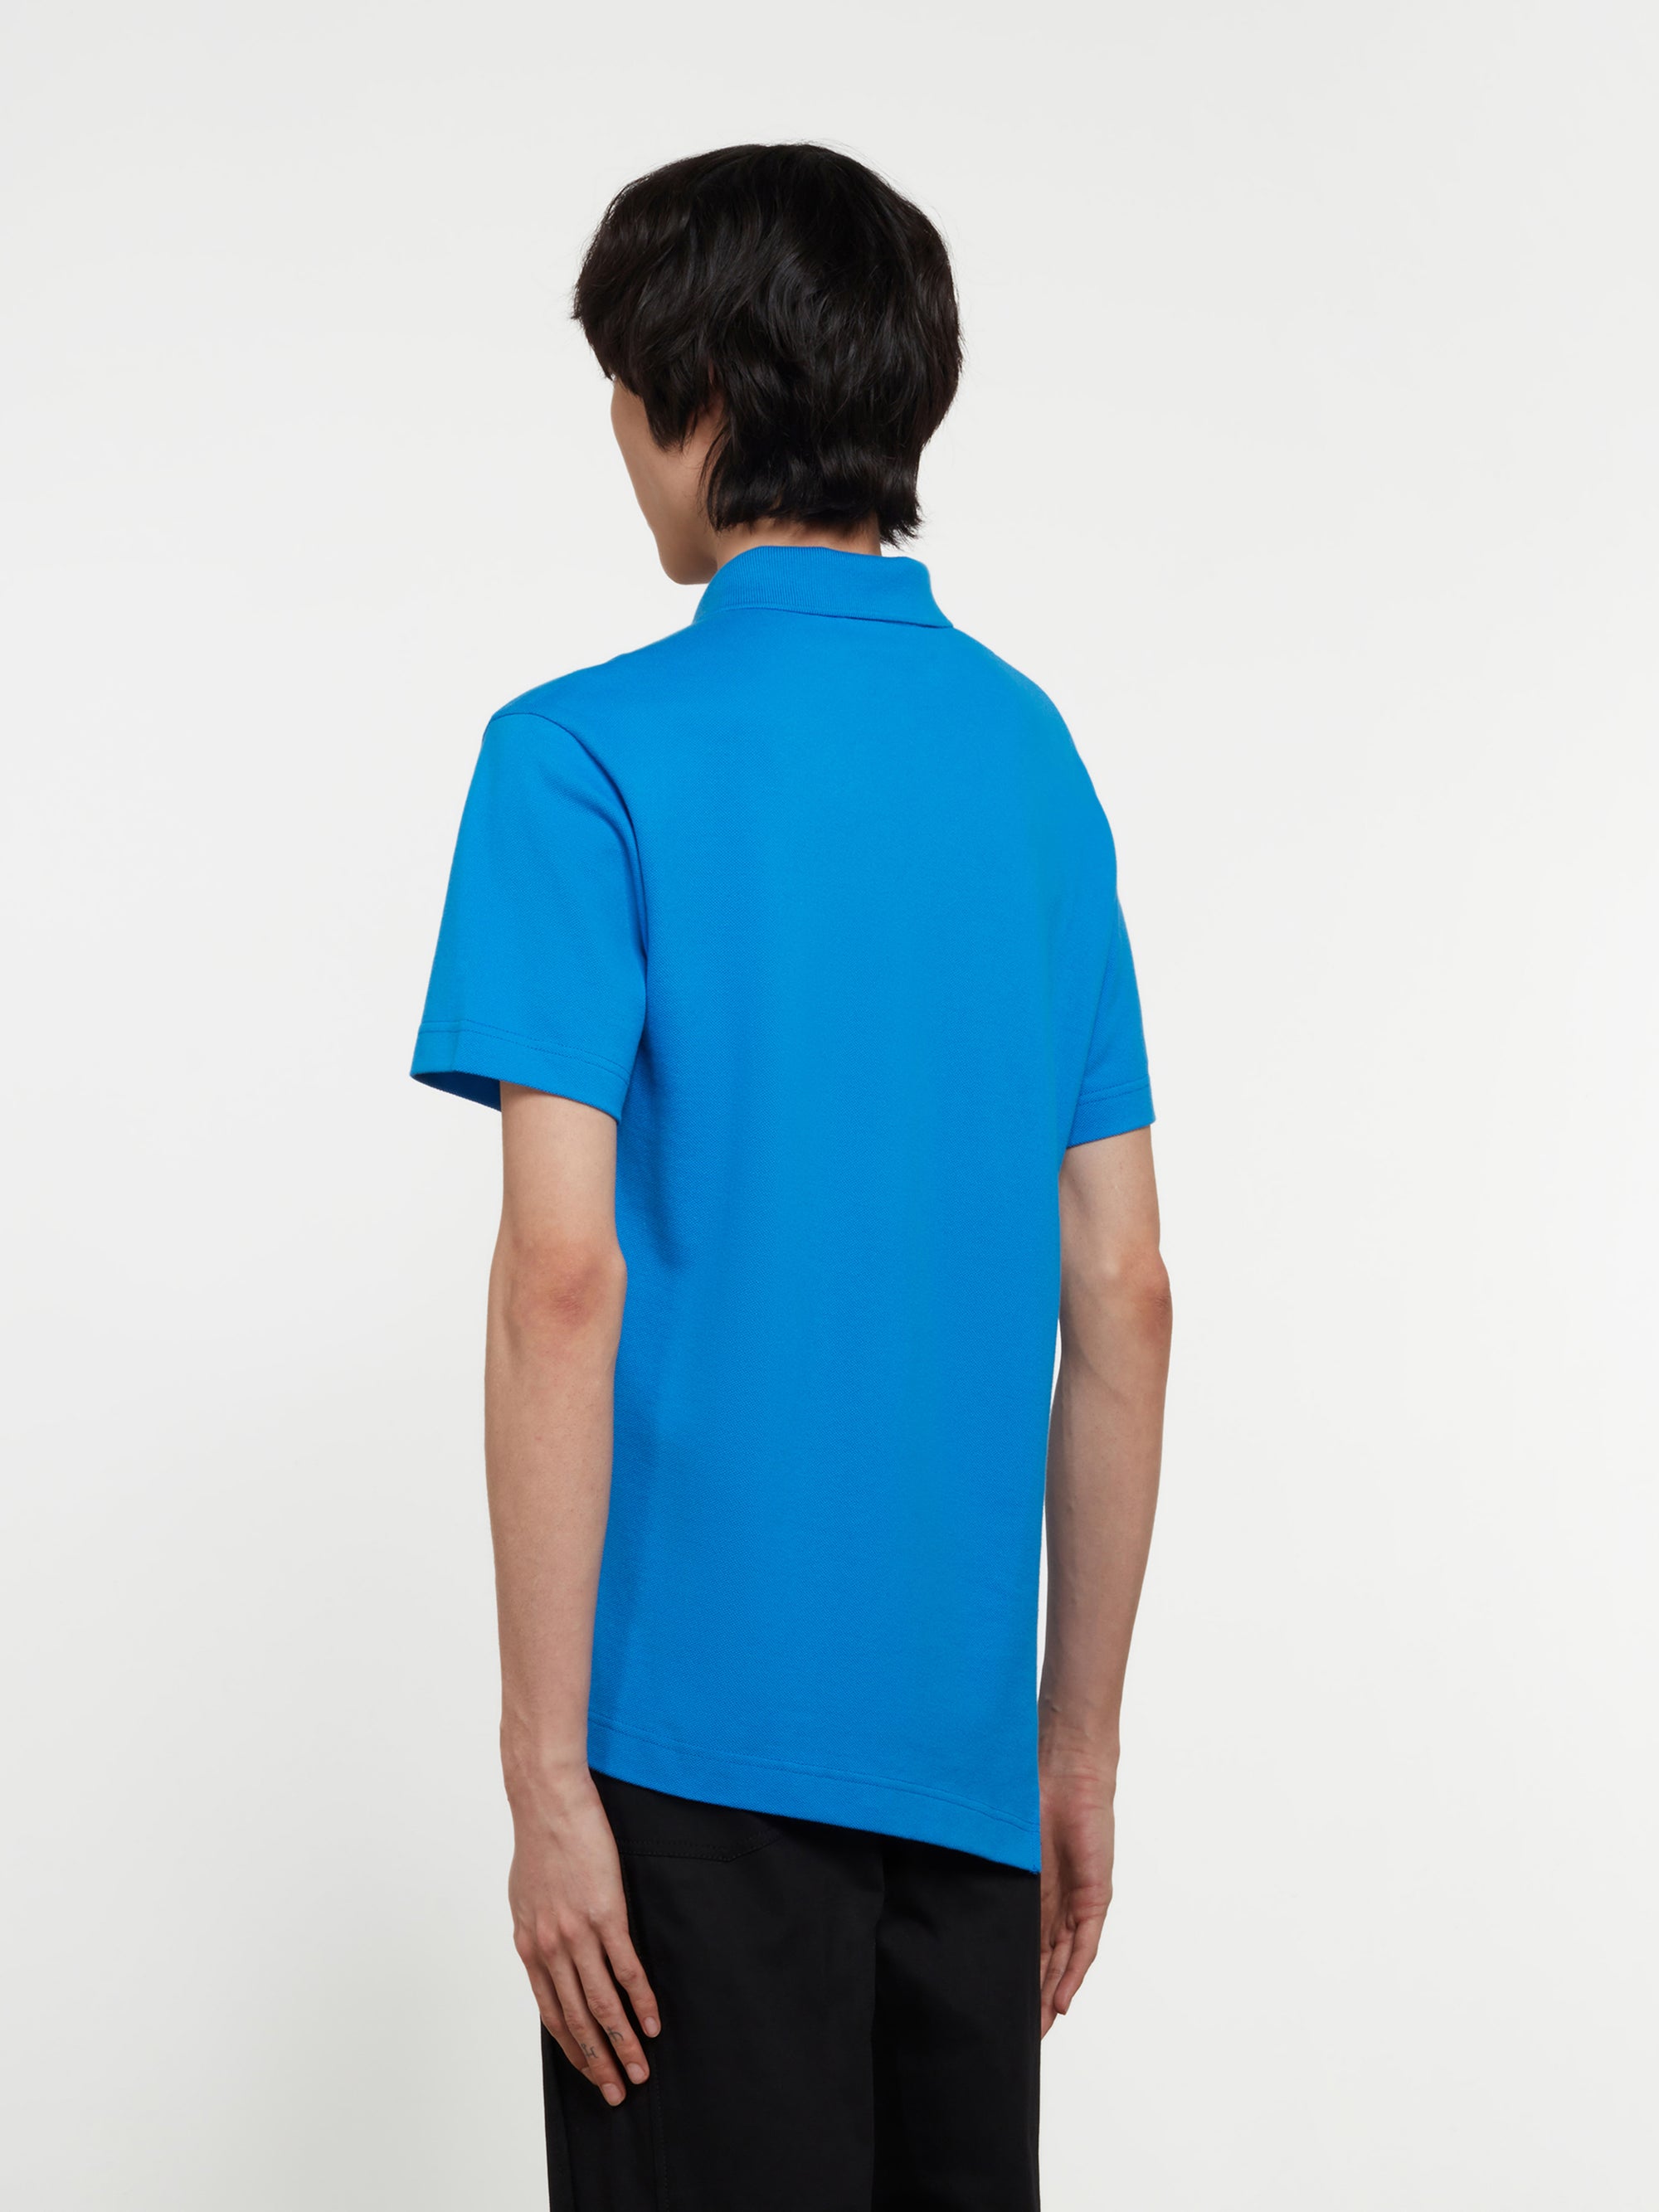 CDG Shirt - Lacoste Men’s Polo Shirt - (Blue) view 3